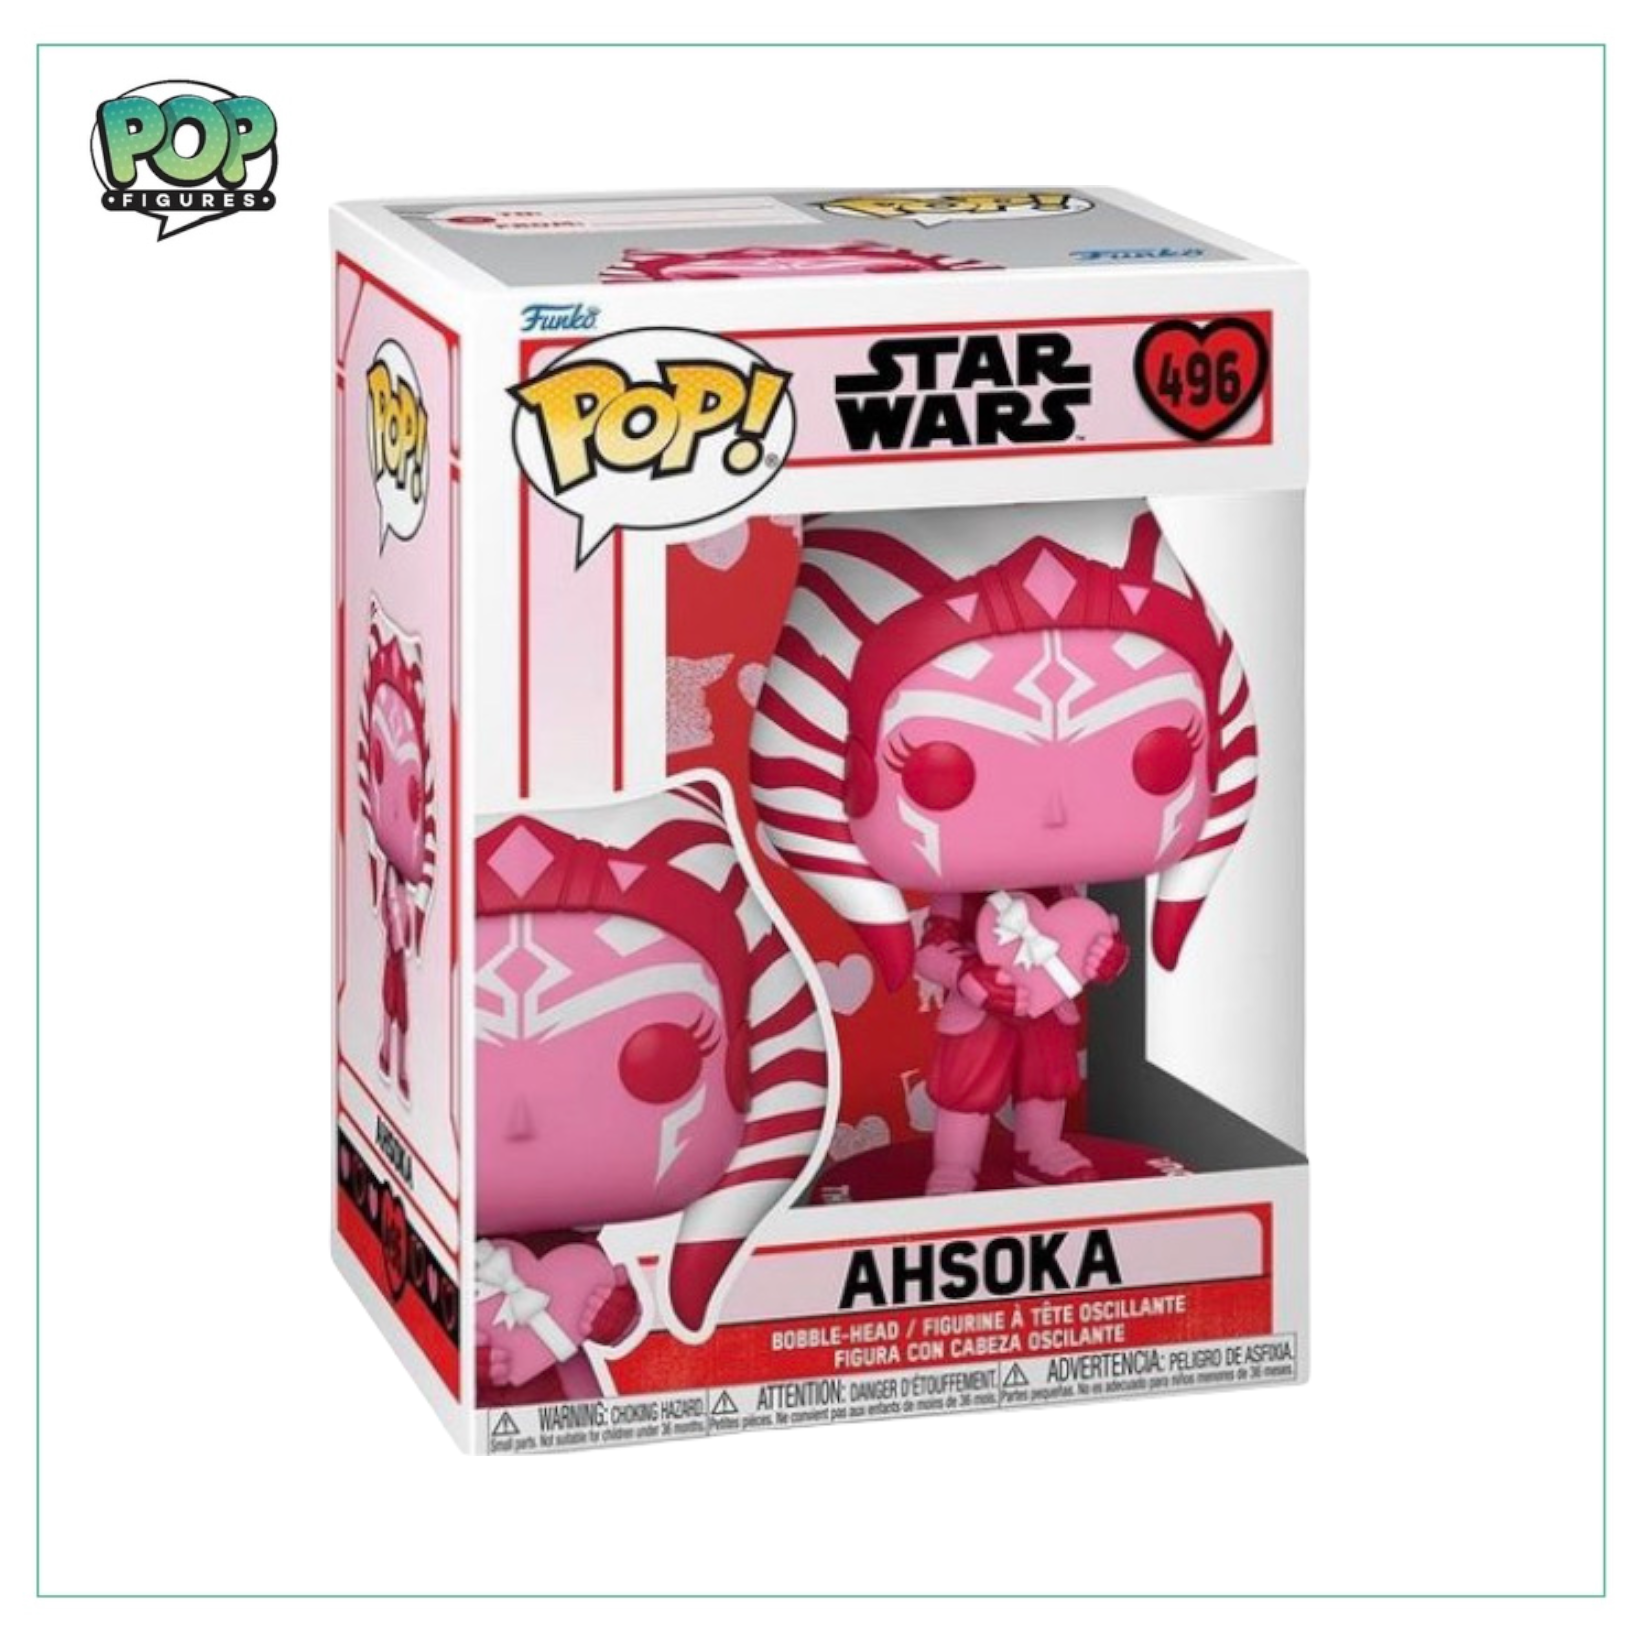 Ahsoka #496 Funko Pop! - Star Wars - Valentine’s